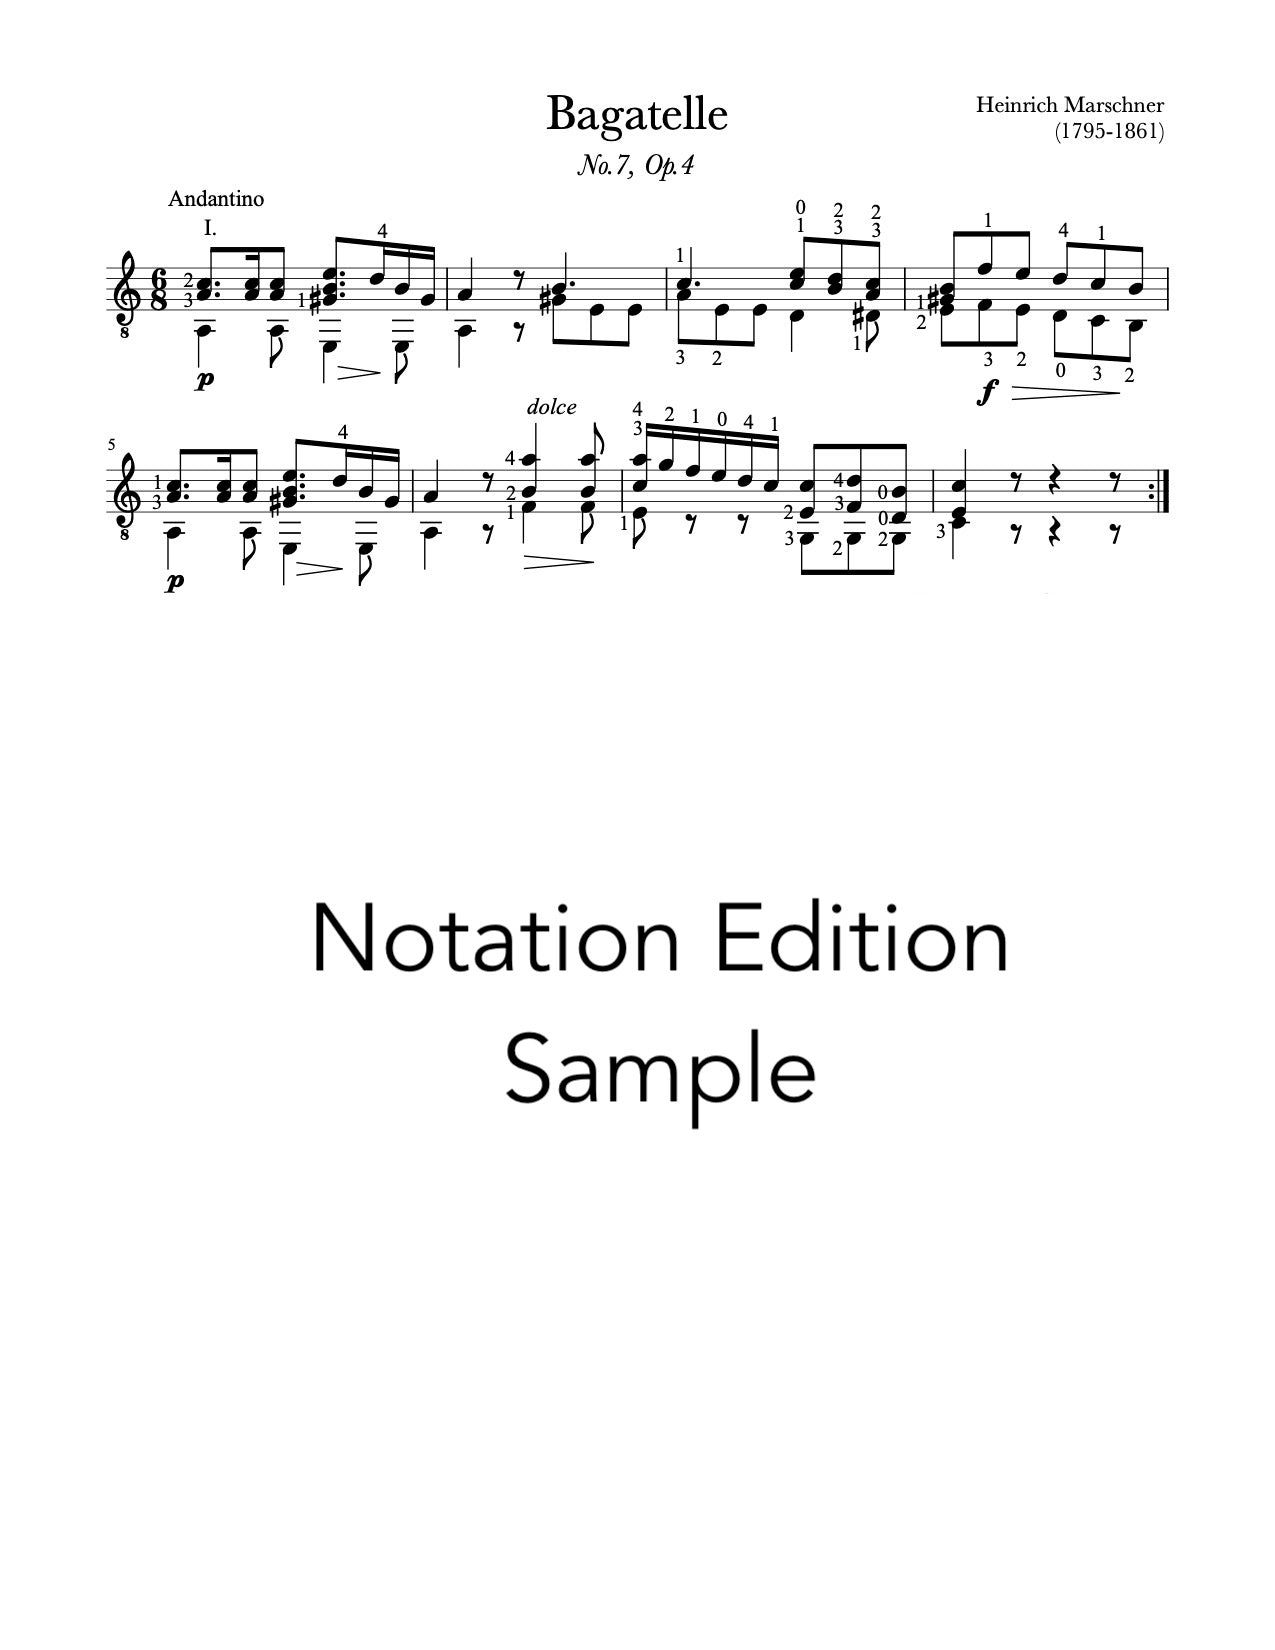 Bagatelle No.7 & No.8, Op.4 by Marschner - Notation Sample